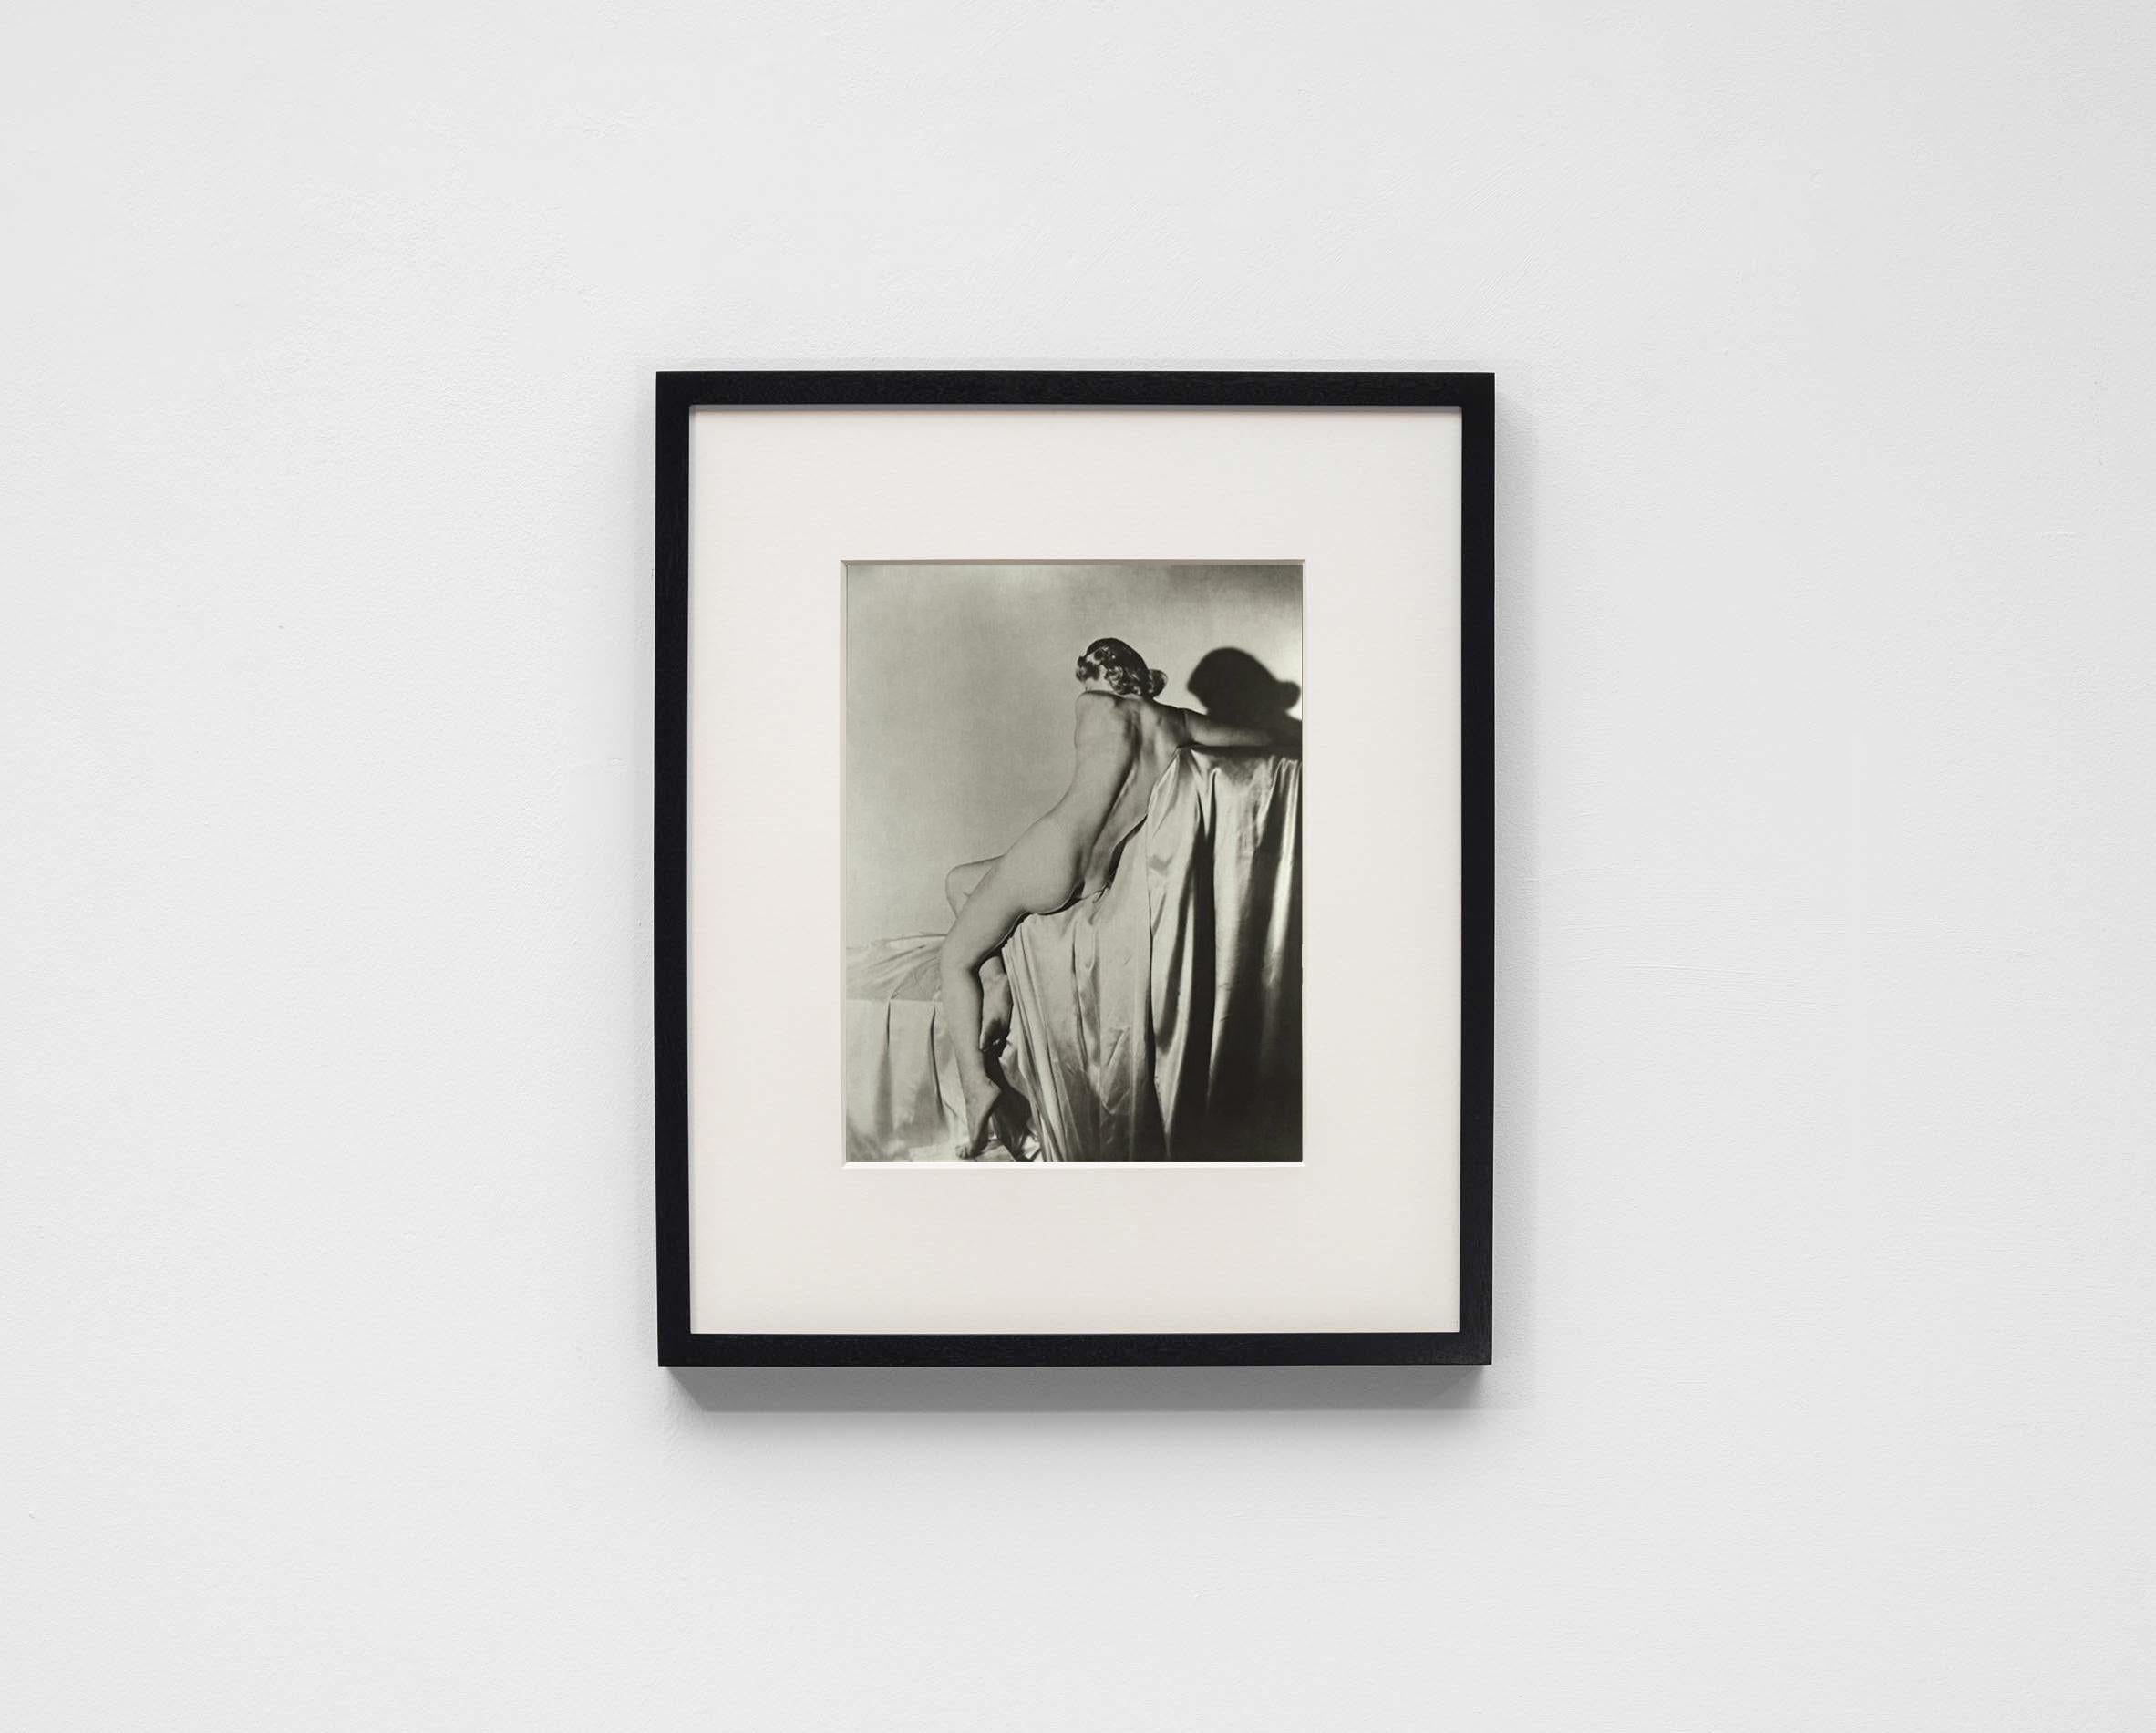 Lisa on Silk, New York, 1940 - Horst P. Horst (Black and White Photography) For Sale 1